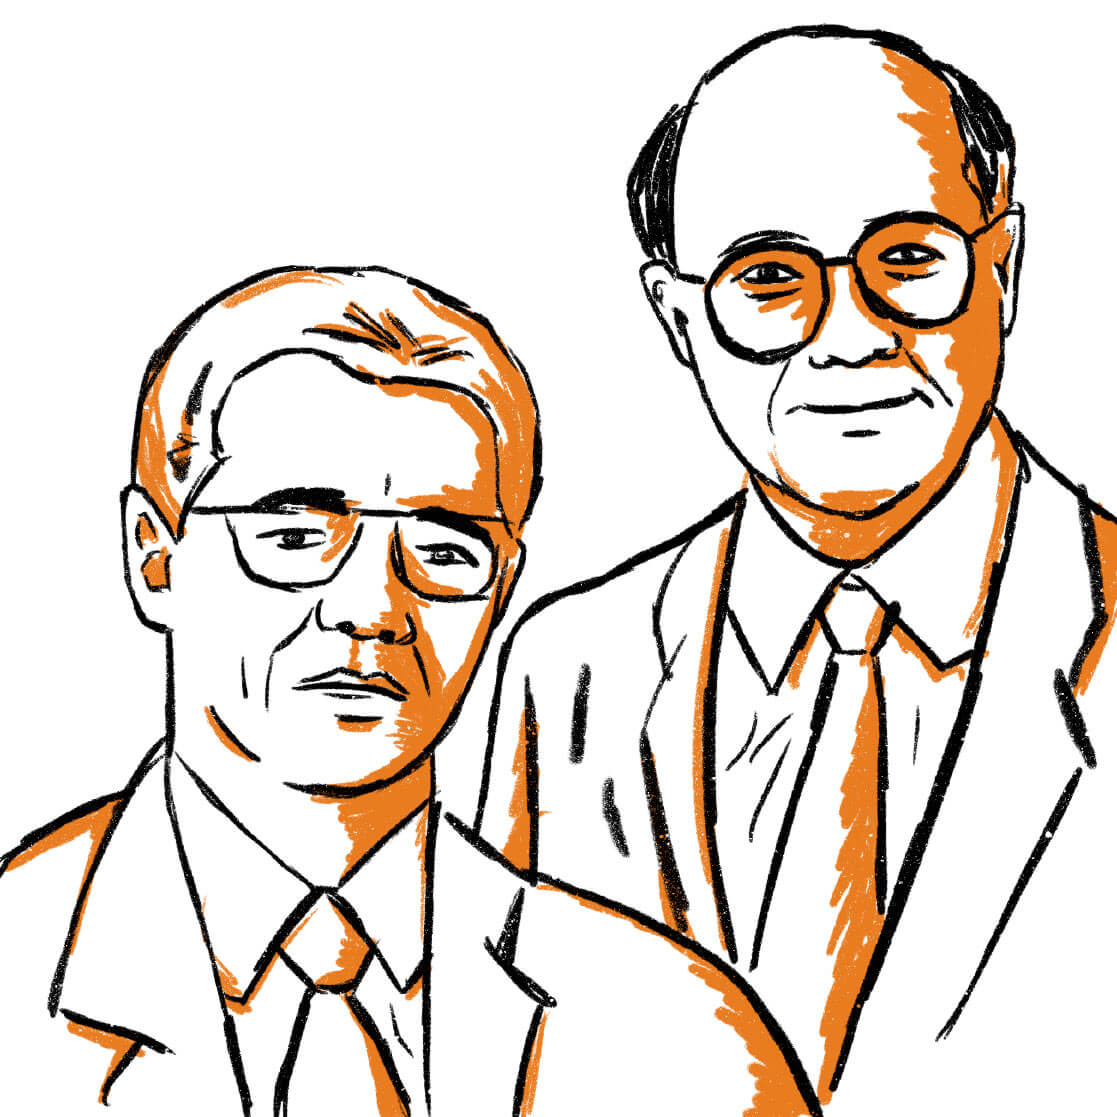 Angel P. Bezos ‘69 and Emilio A. Fernandez ‘69 illustrated headshots